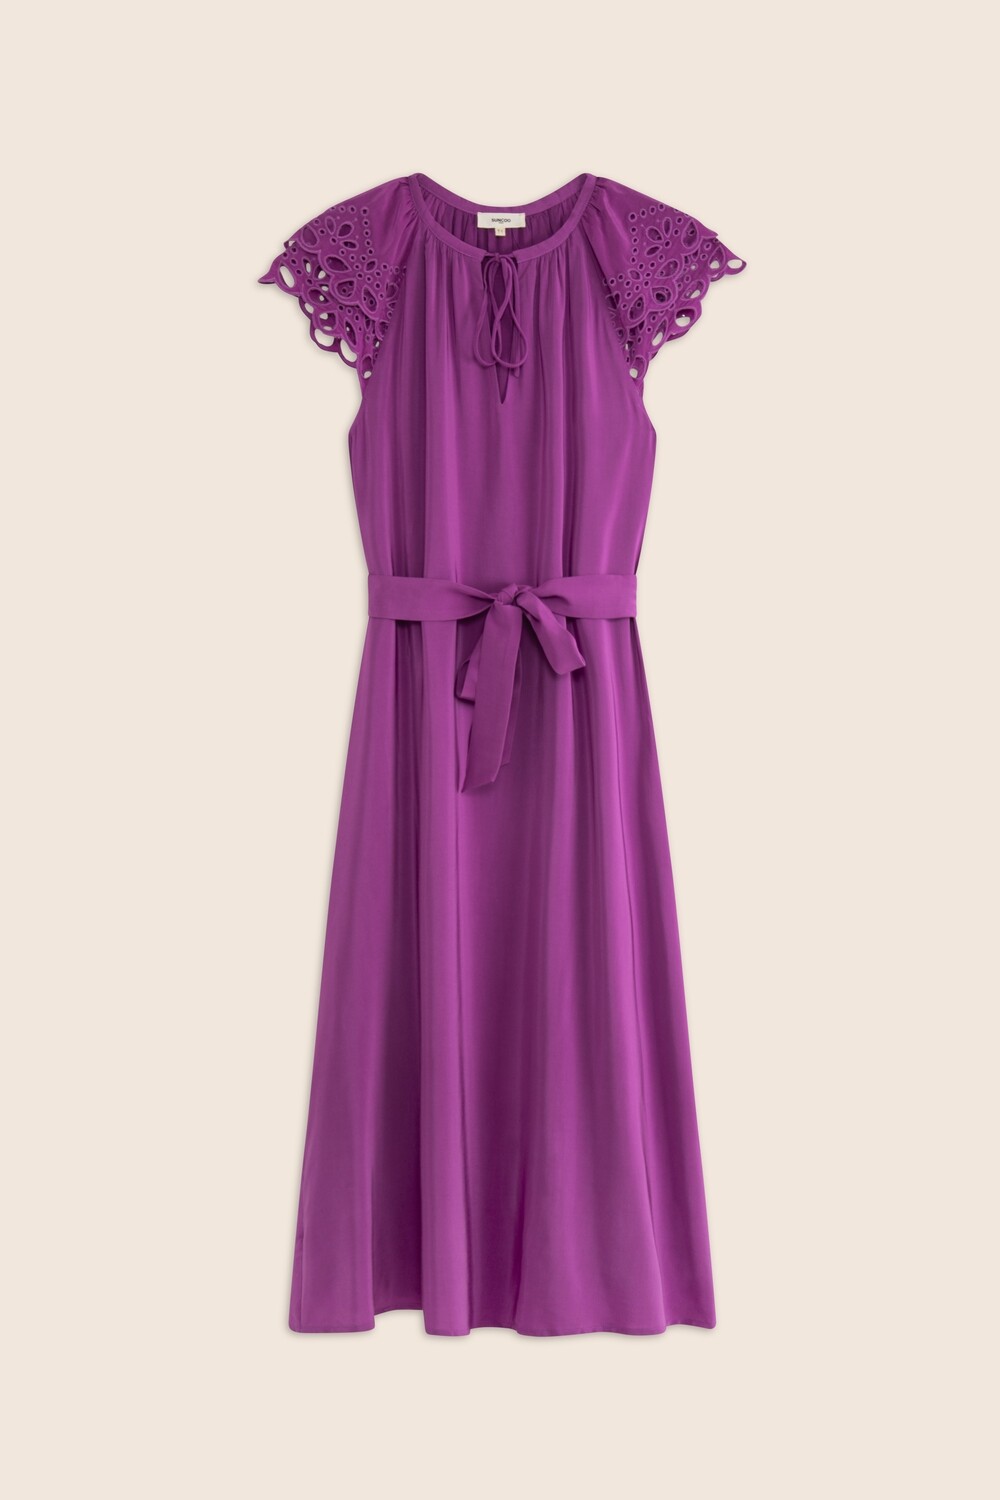 Celest dress, Color: violet, Size: s